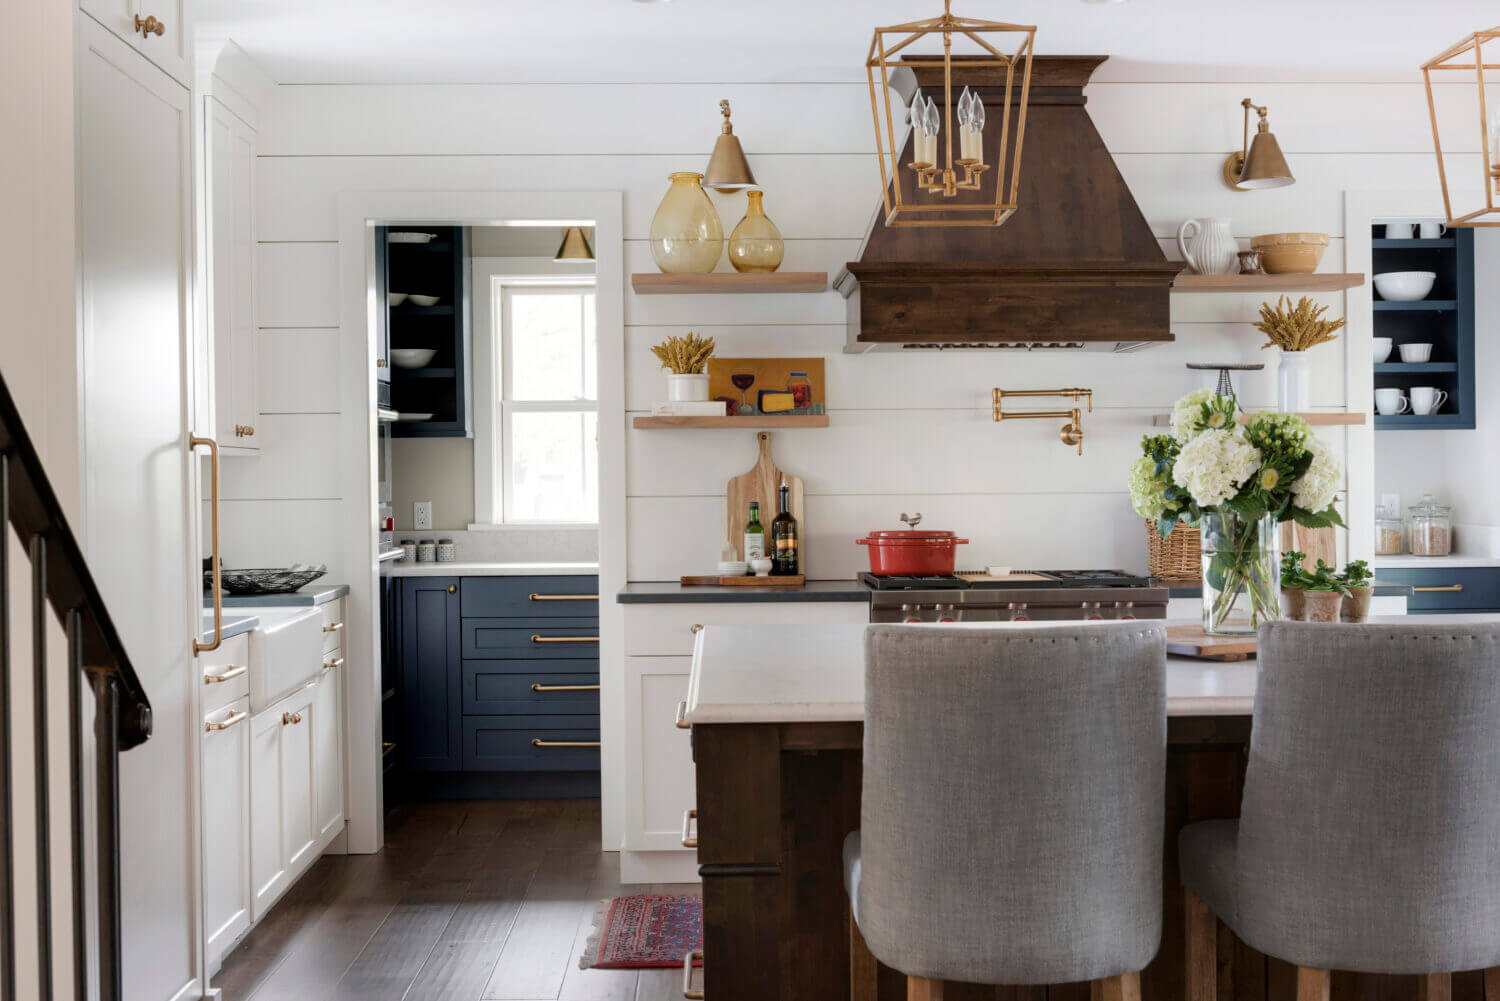 Modern Farmhouse Style in a Minnesotan Kitchen - Dura Supreme Cabinetry